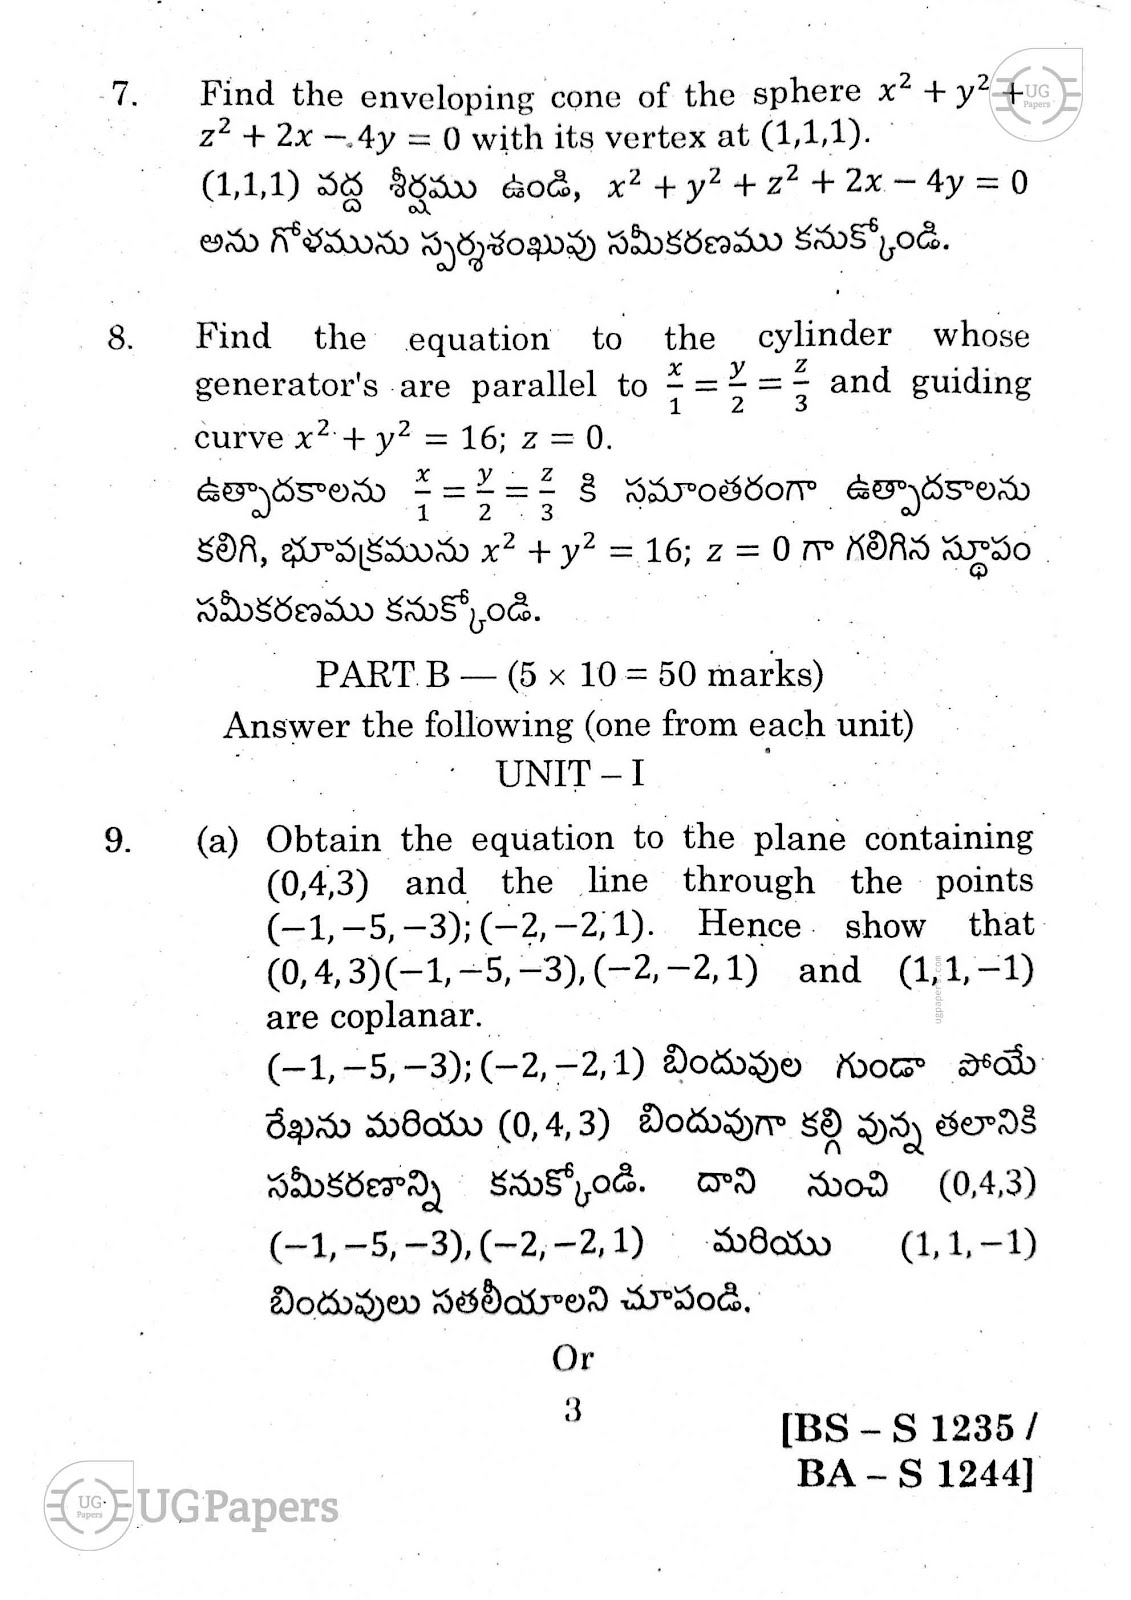 ugpapers.com, Andhra University, Semester 4, Maths 2020